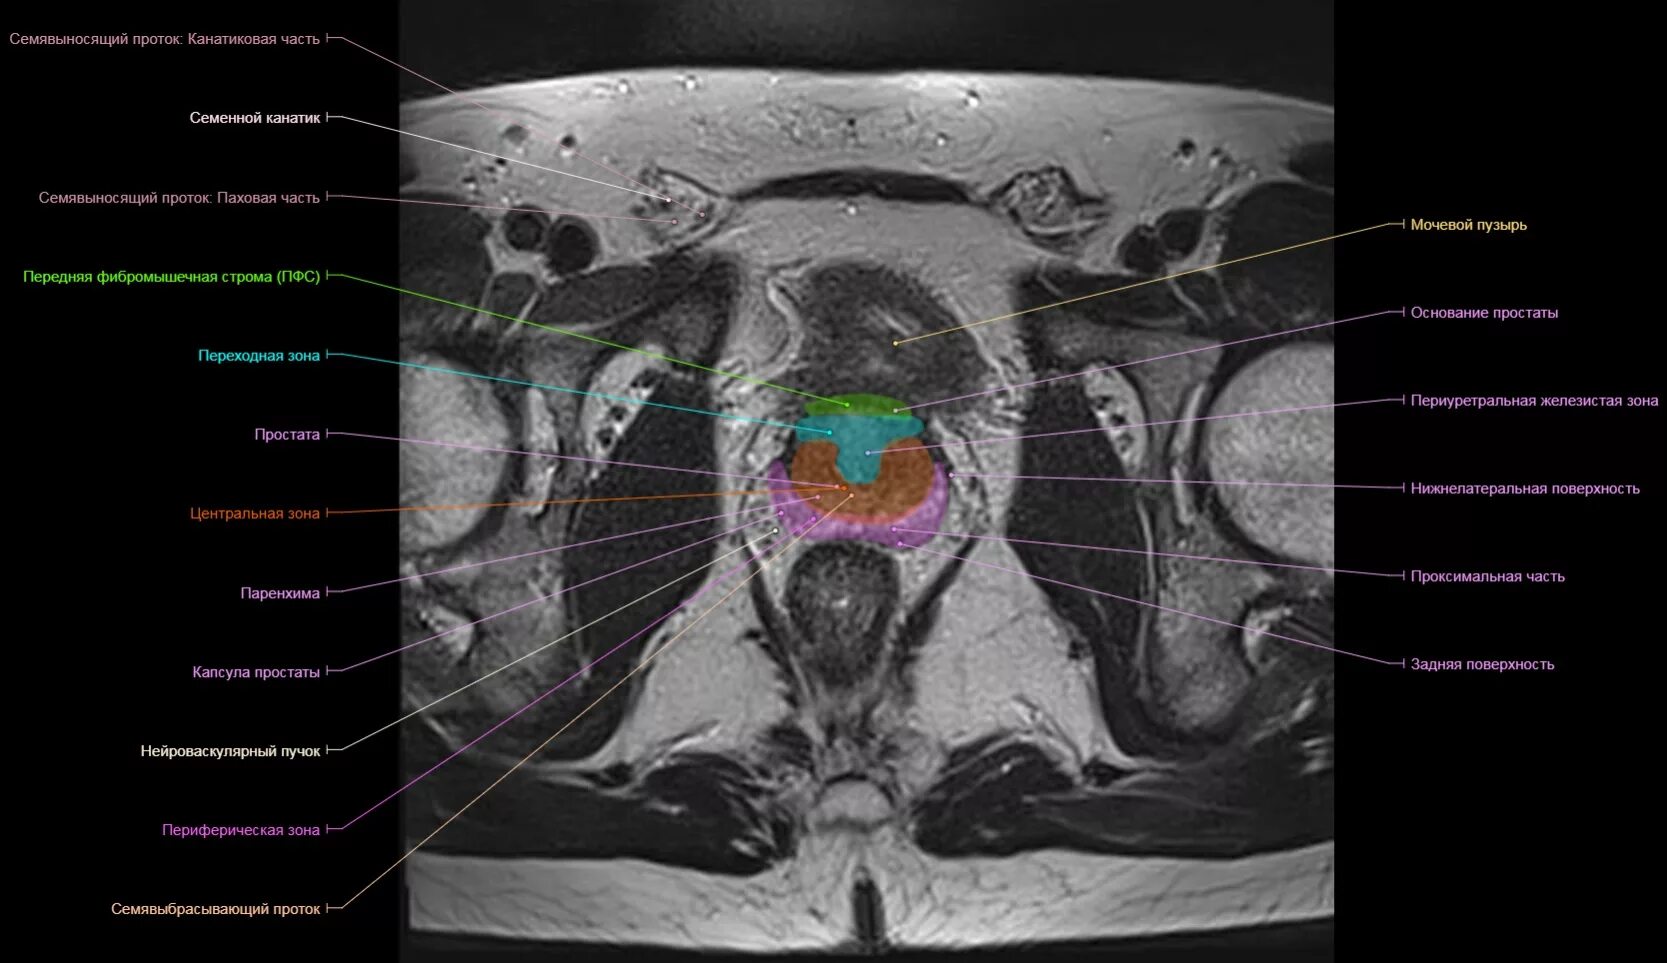 Сегменты предстательной железы мрт. Анатомия предстательной железы мрт схема. Зональная анатомия предстательной железы мрт. Зональное строение предстательной железы мрт. Аденома простаты мрт